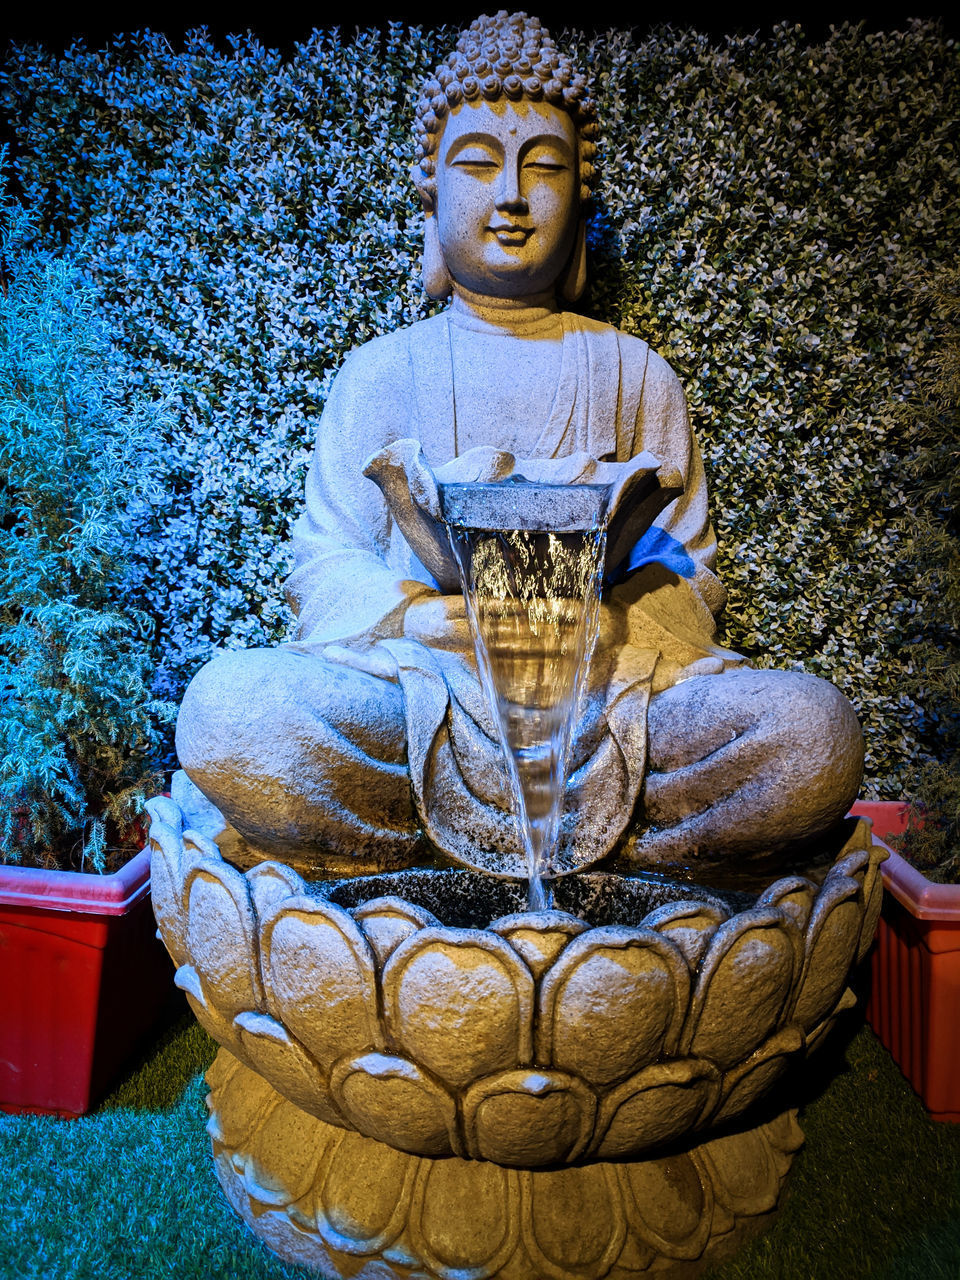 SCULPTURE OF BUDDHA STATUE OUTDOORS